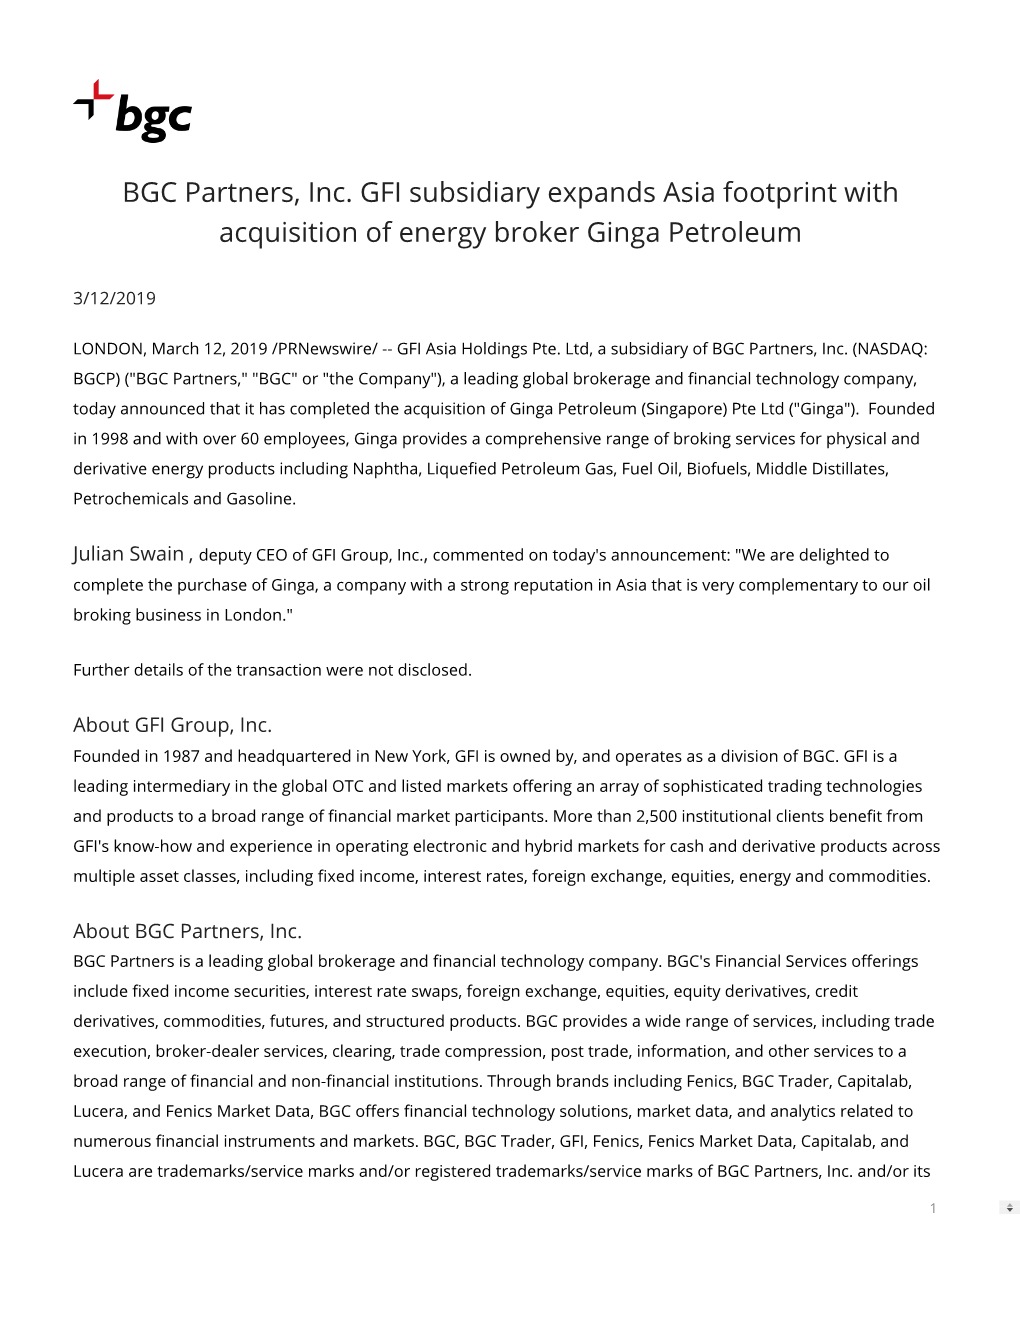 BGC Partners, Inc. GFI Subsidiary Expands Asia Footprint with Acquisition of Energy Broker Ginga Petroleum